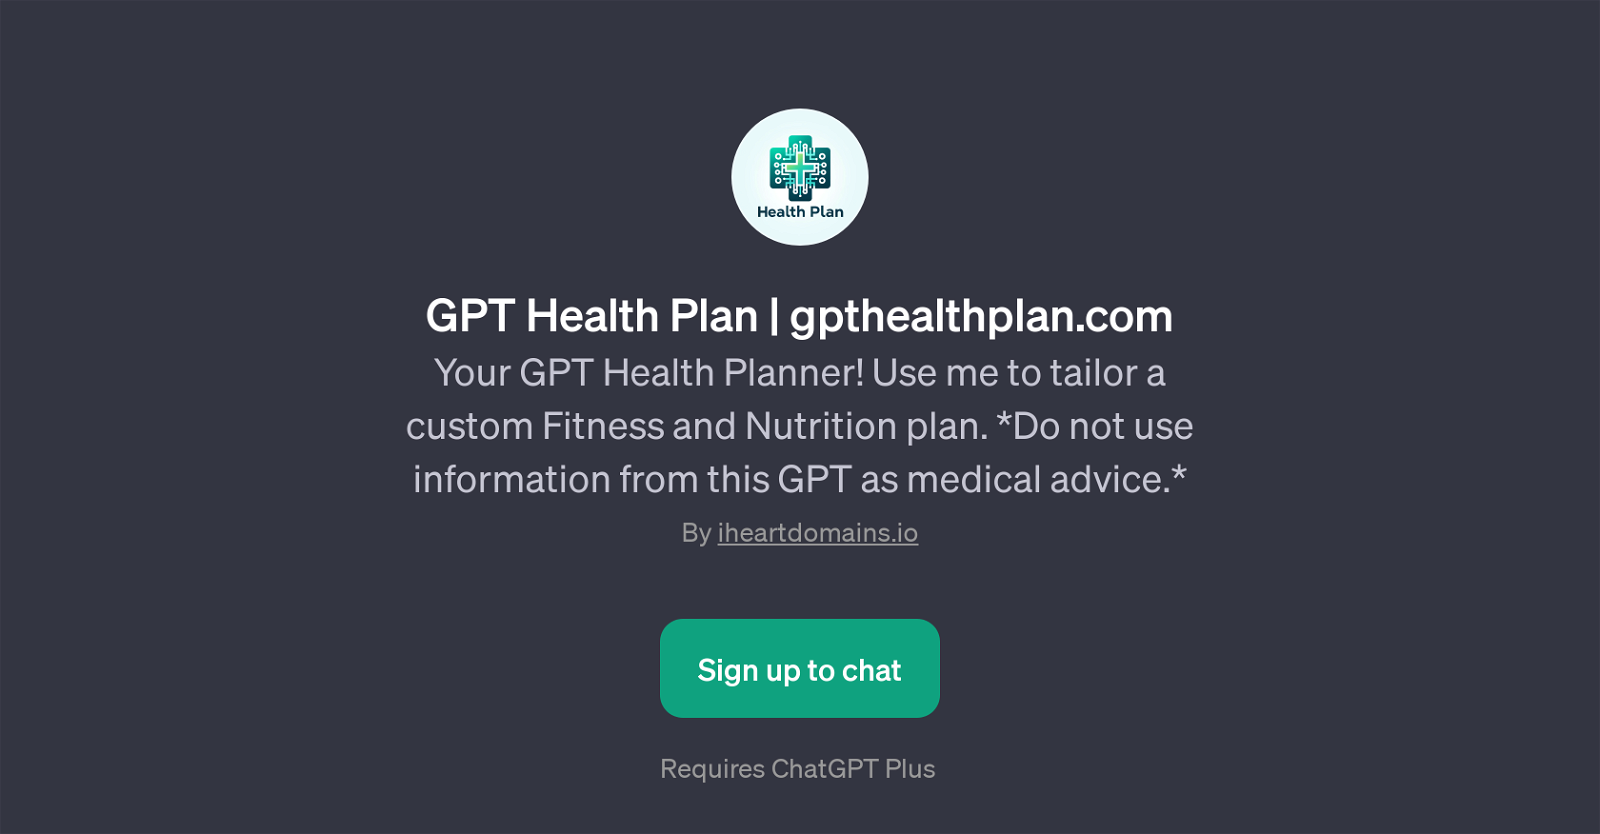 GPT Health Plan website